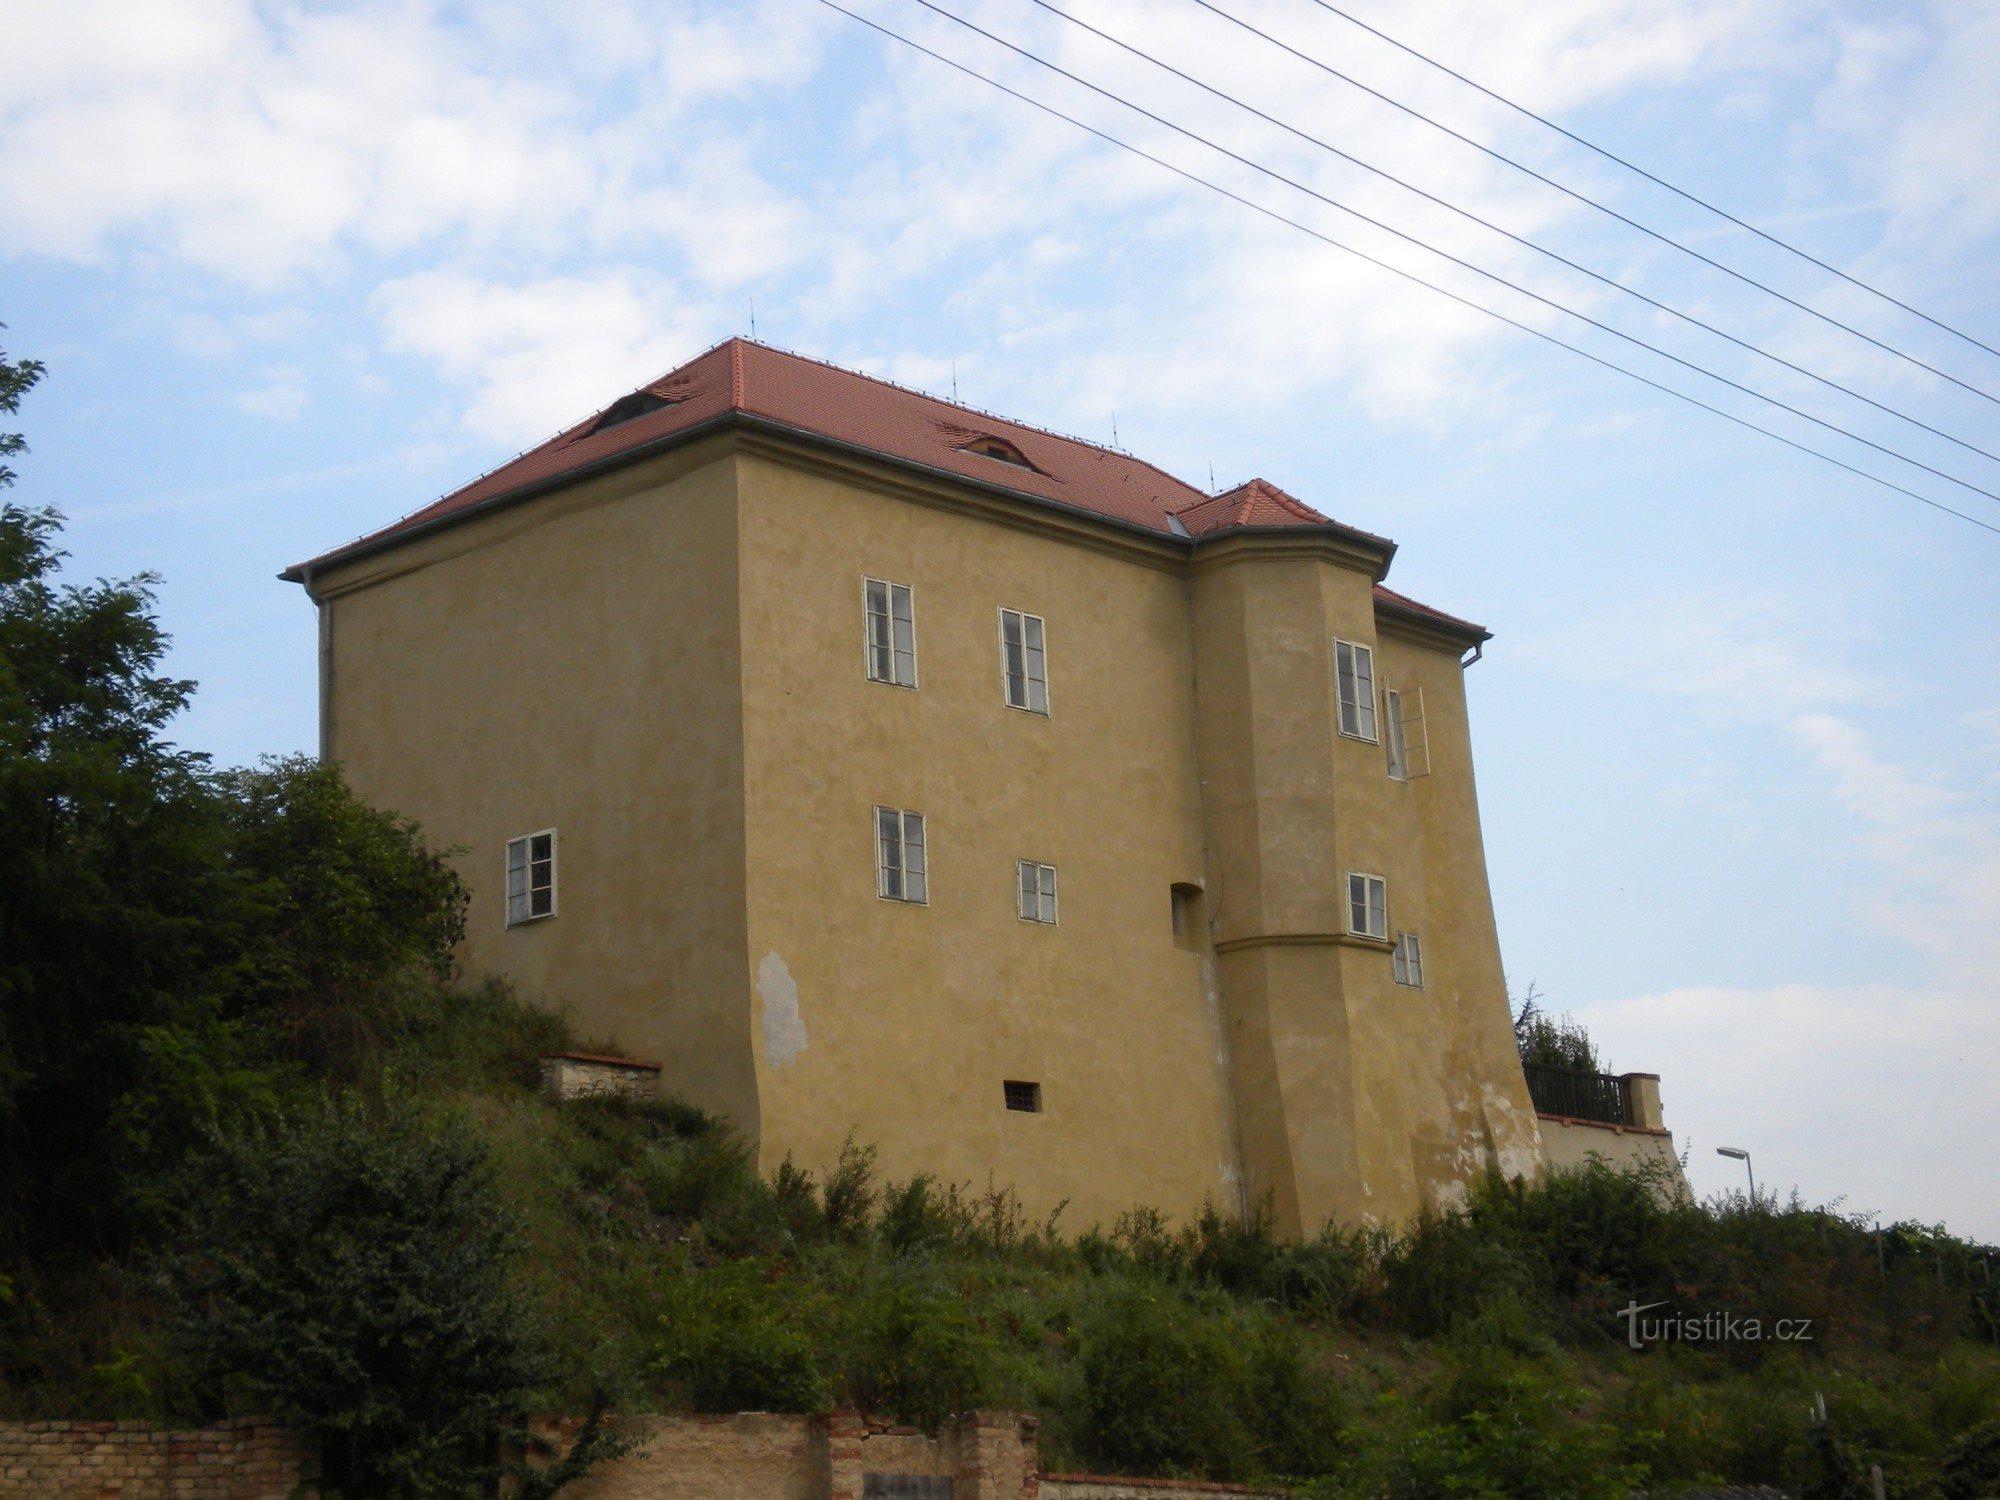 Fortaleza de Brozany nad Ohří.